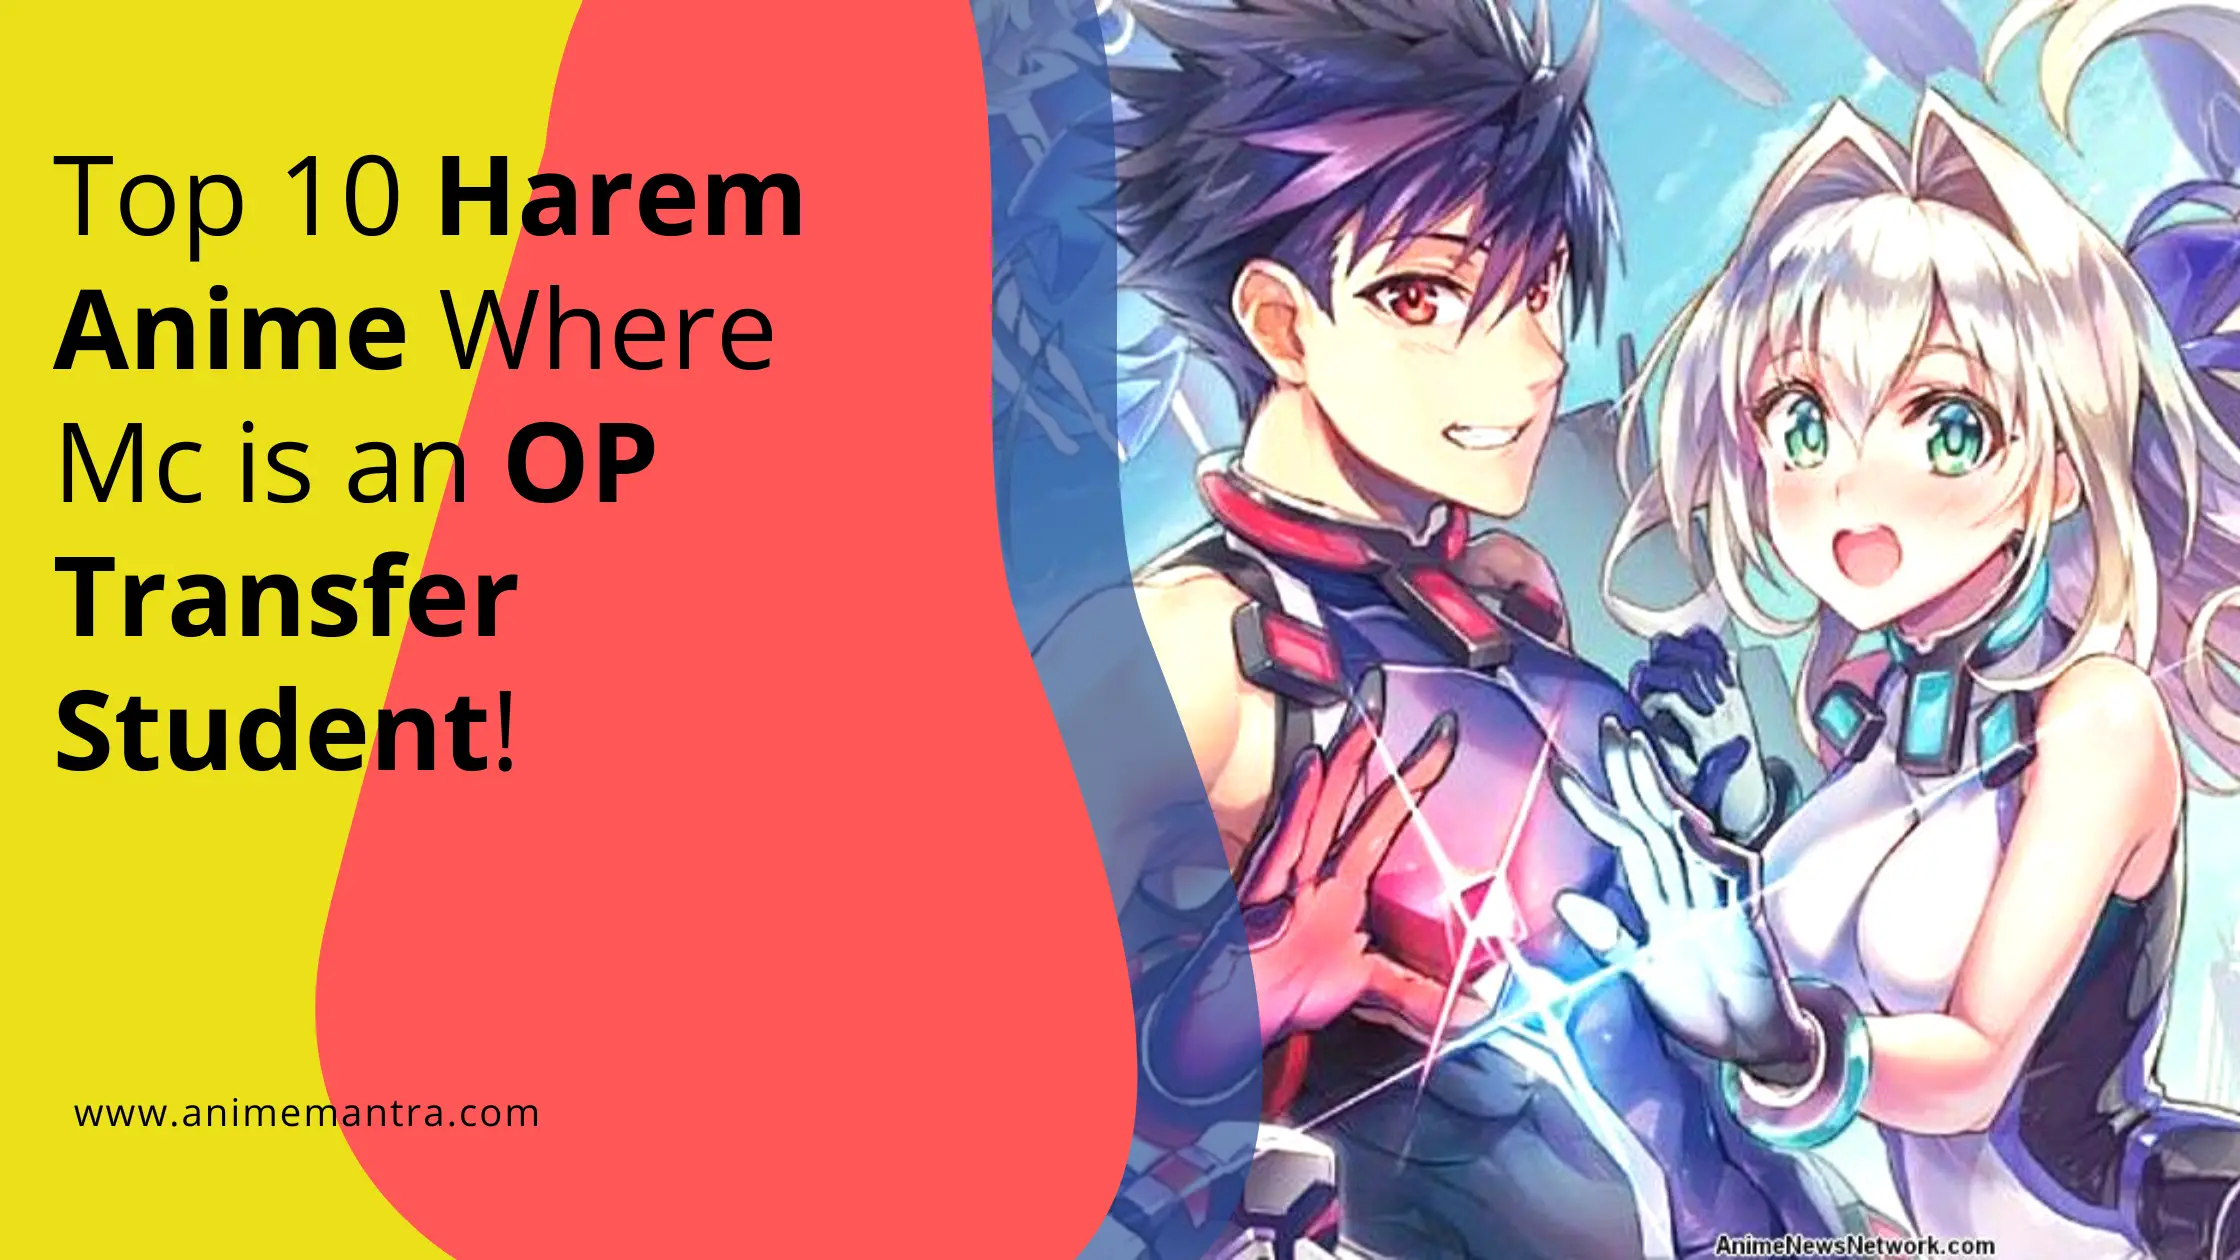 Top 10 Harem Anime Where Mc is an OP Transfer Student! - Anime Mantra